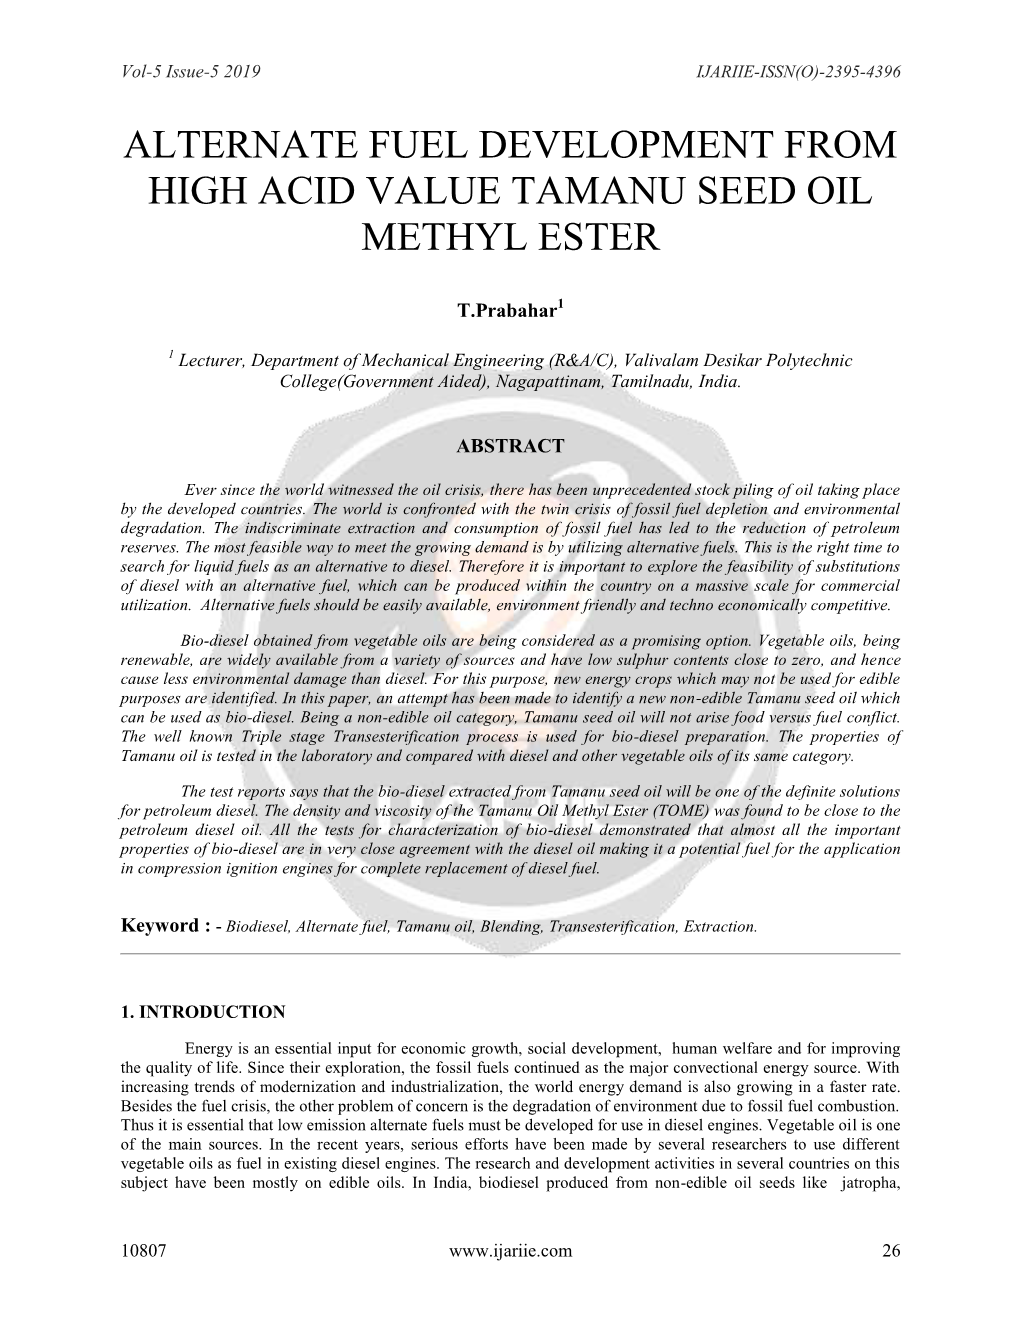 Alternate Fuel Development from High Acid Value Tamanu Seed Oil Methyl Ester